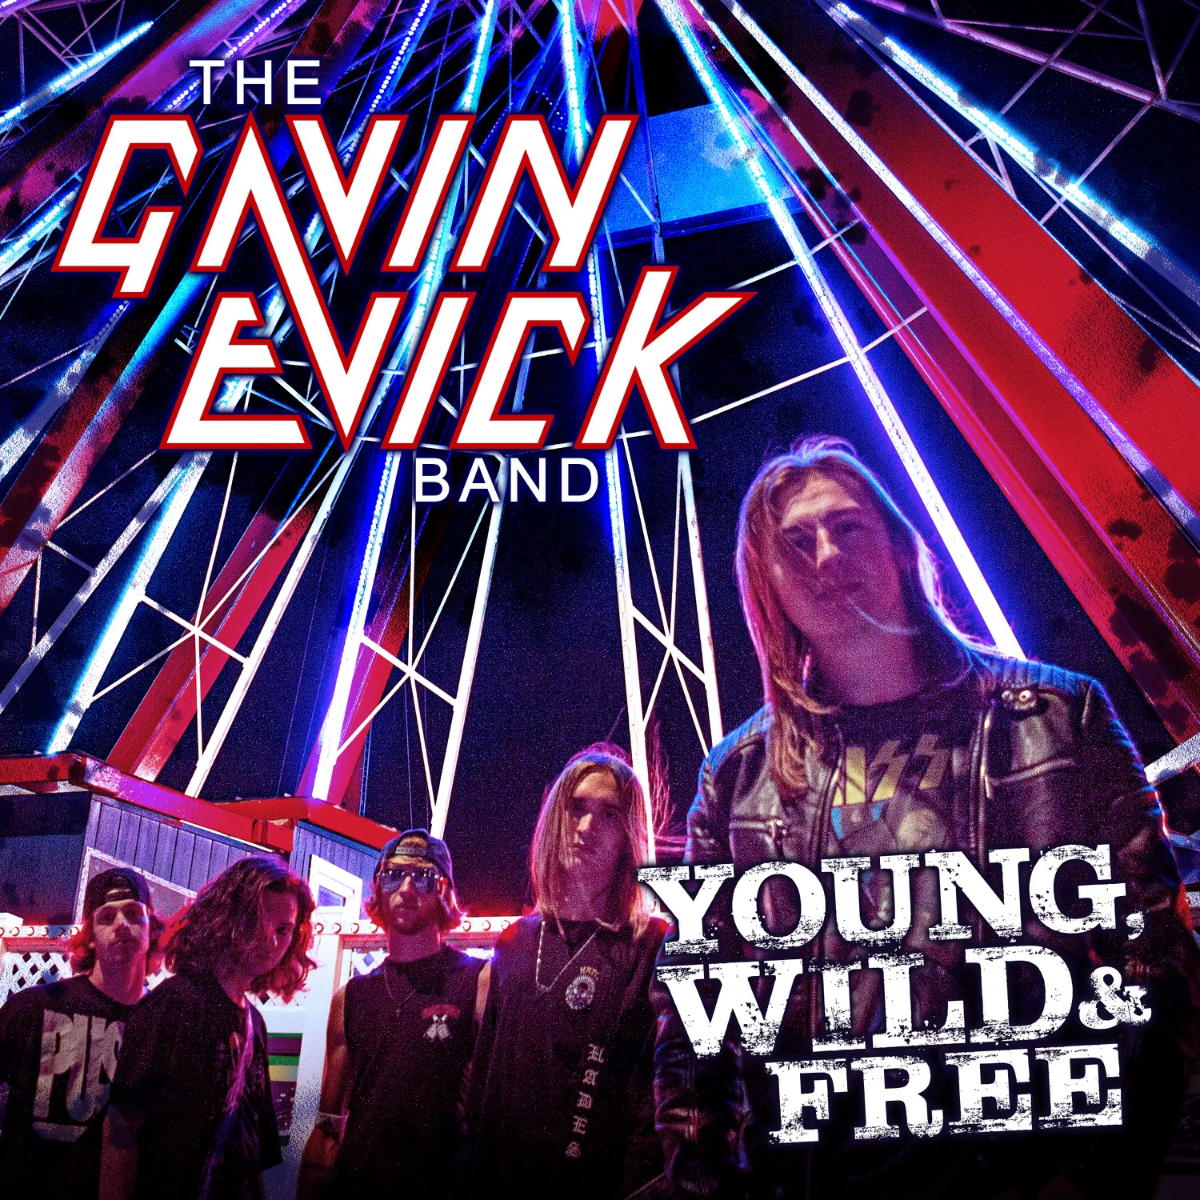 The Gavin Evick Band